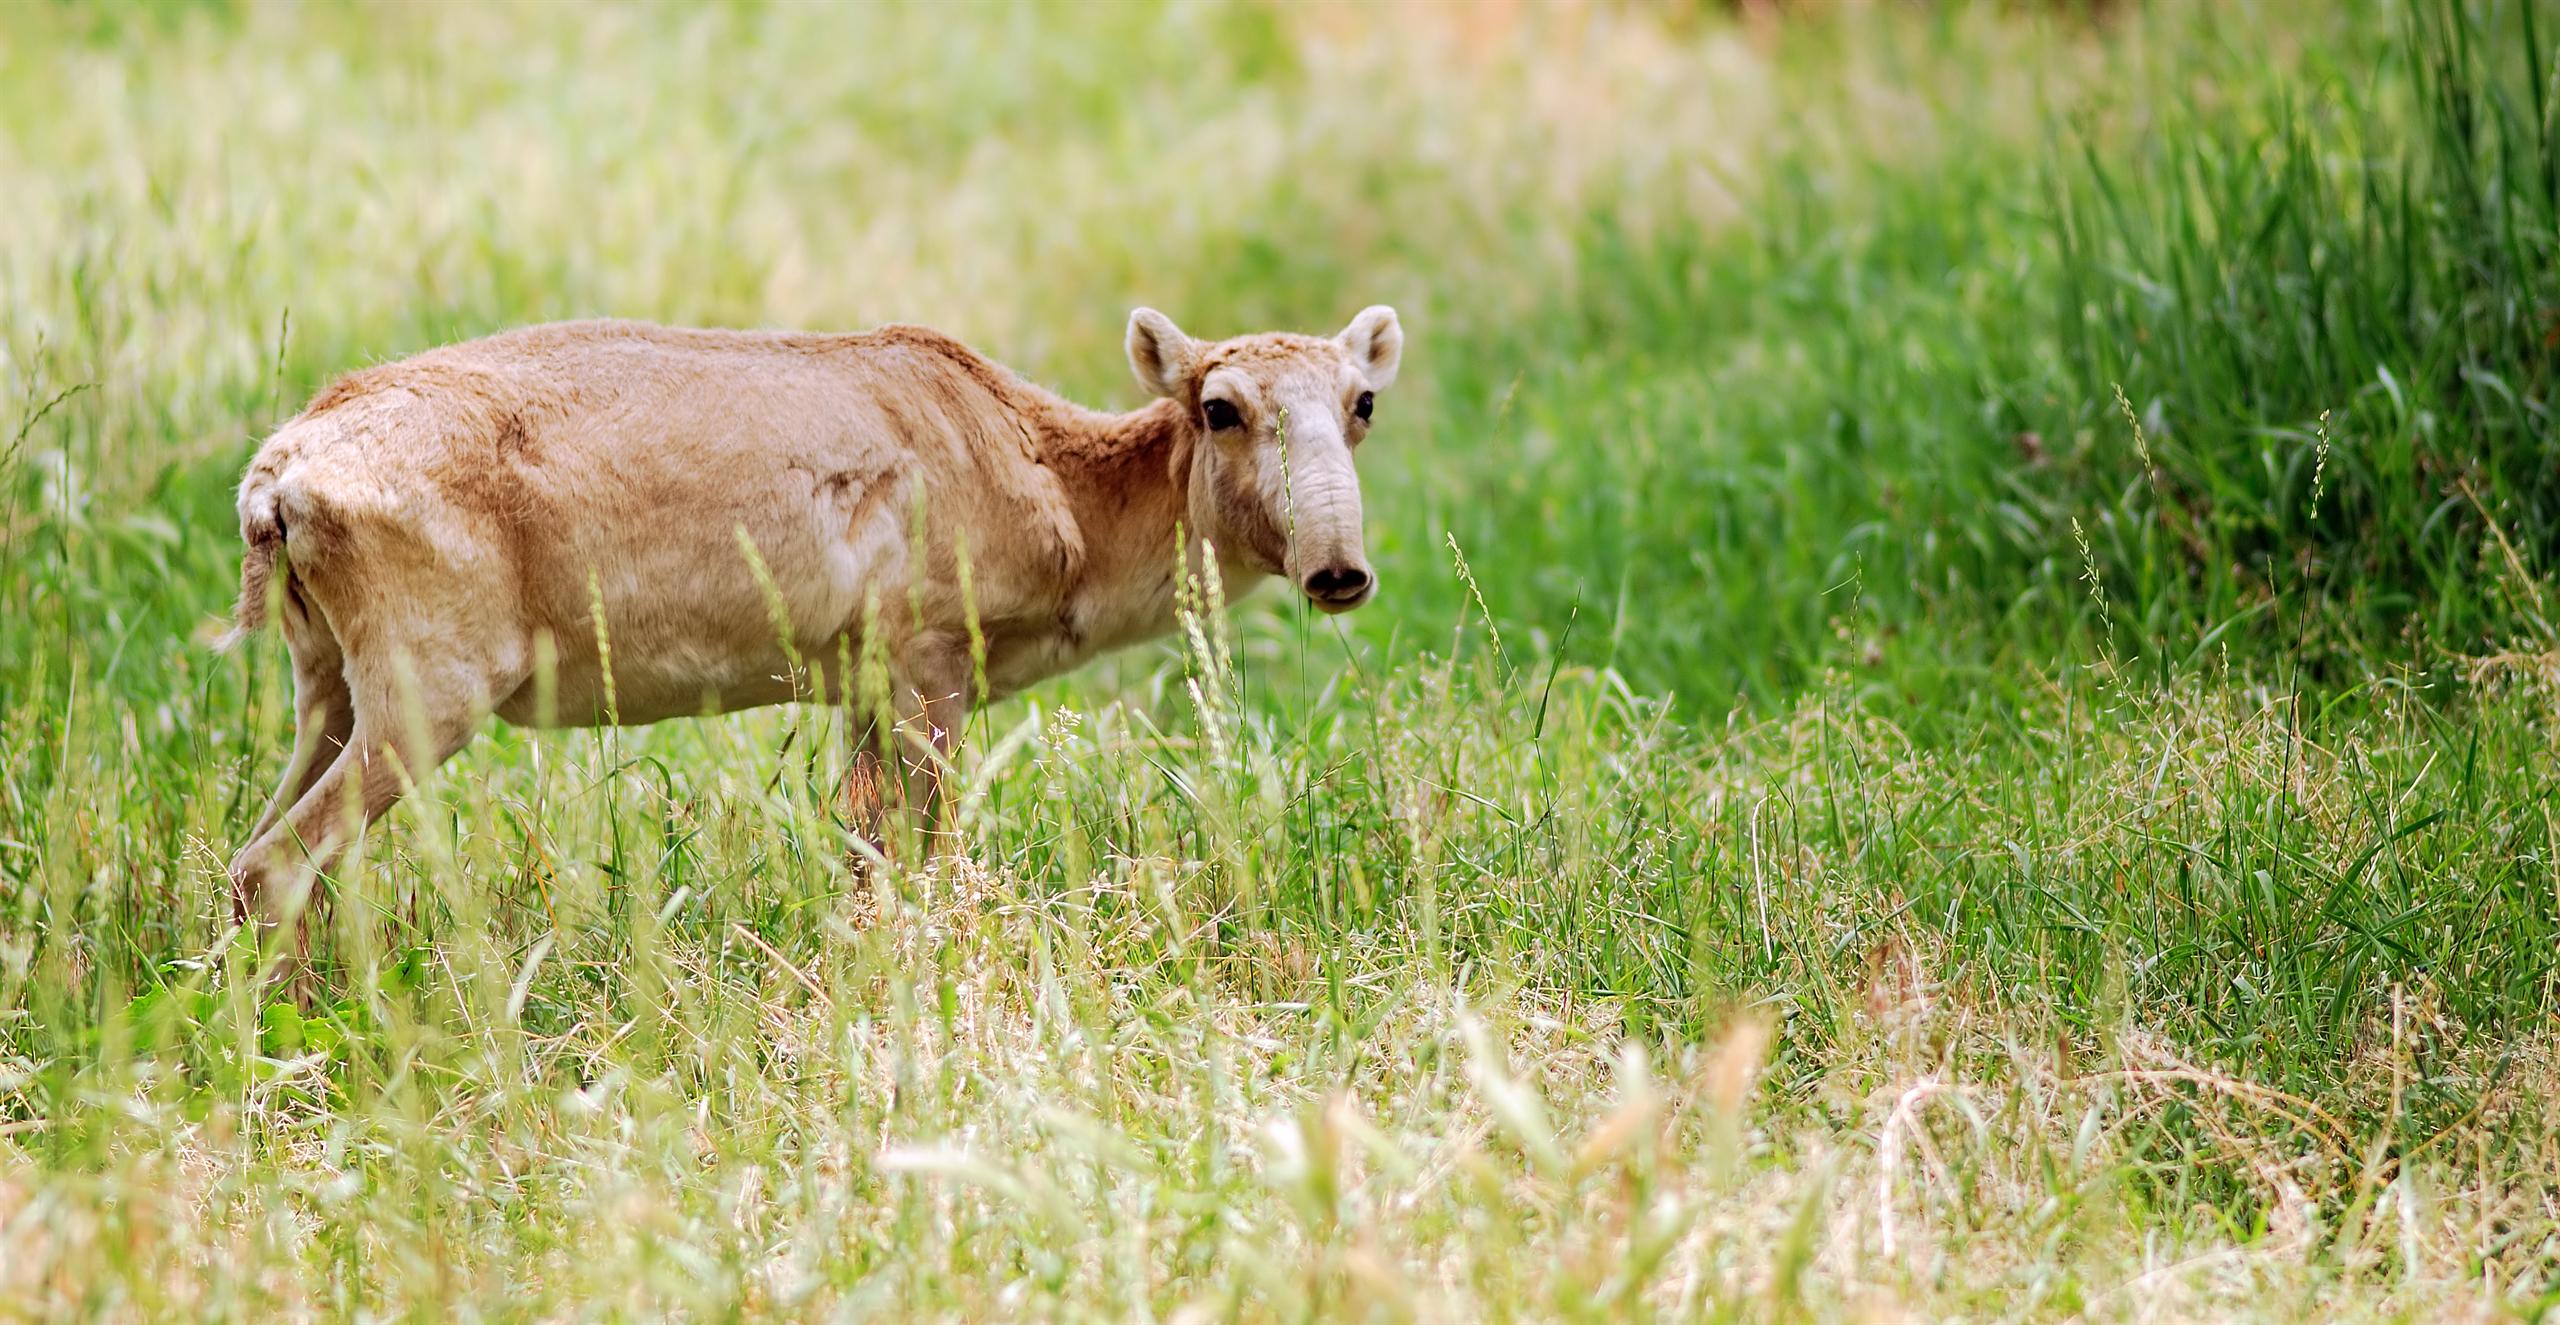 Saiga antelope in long grass